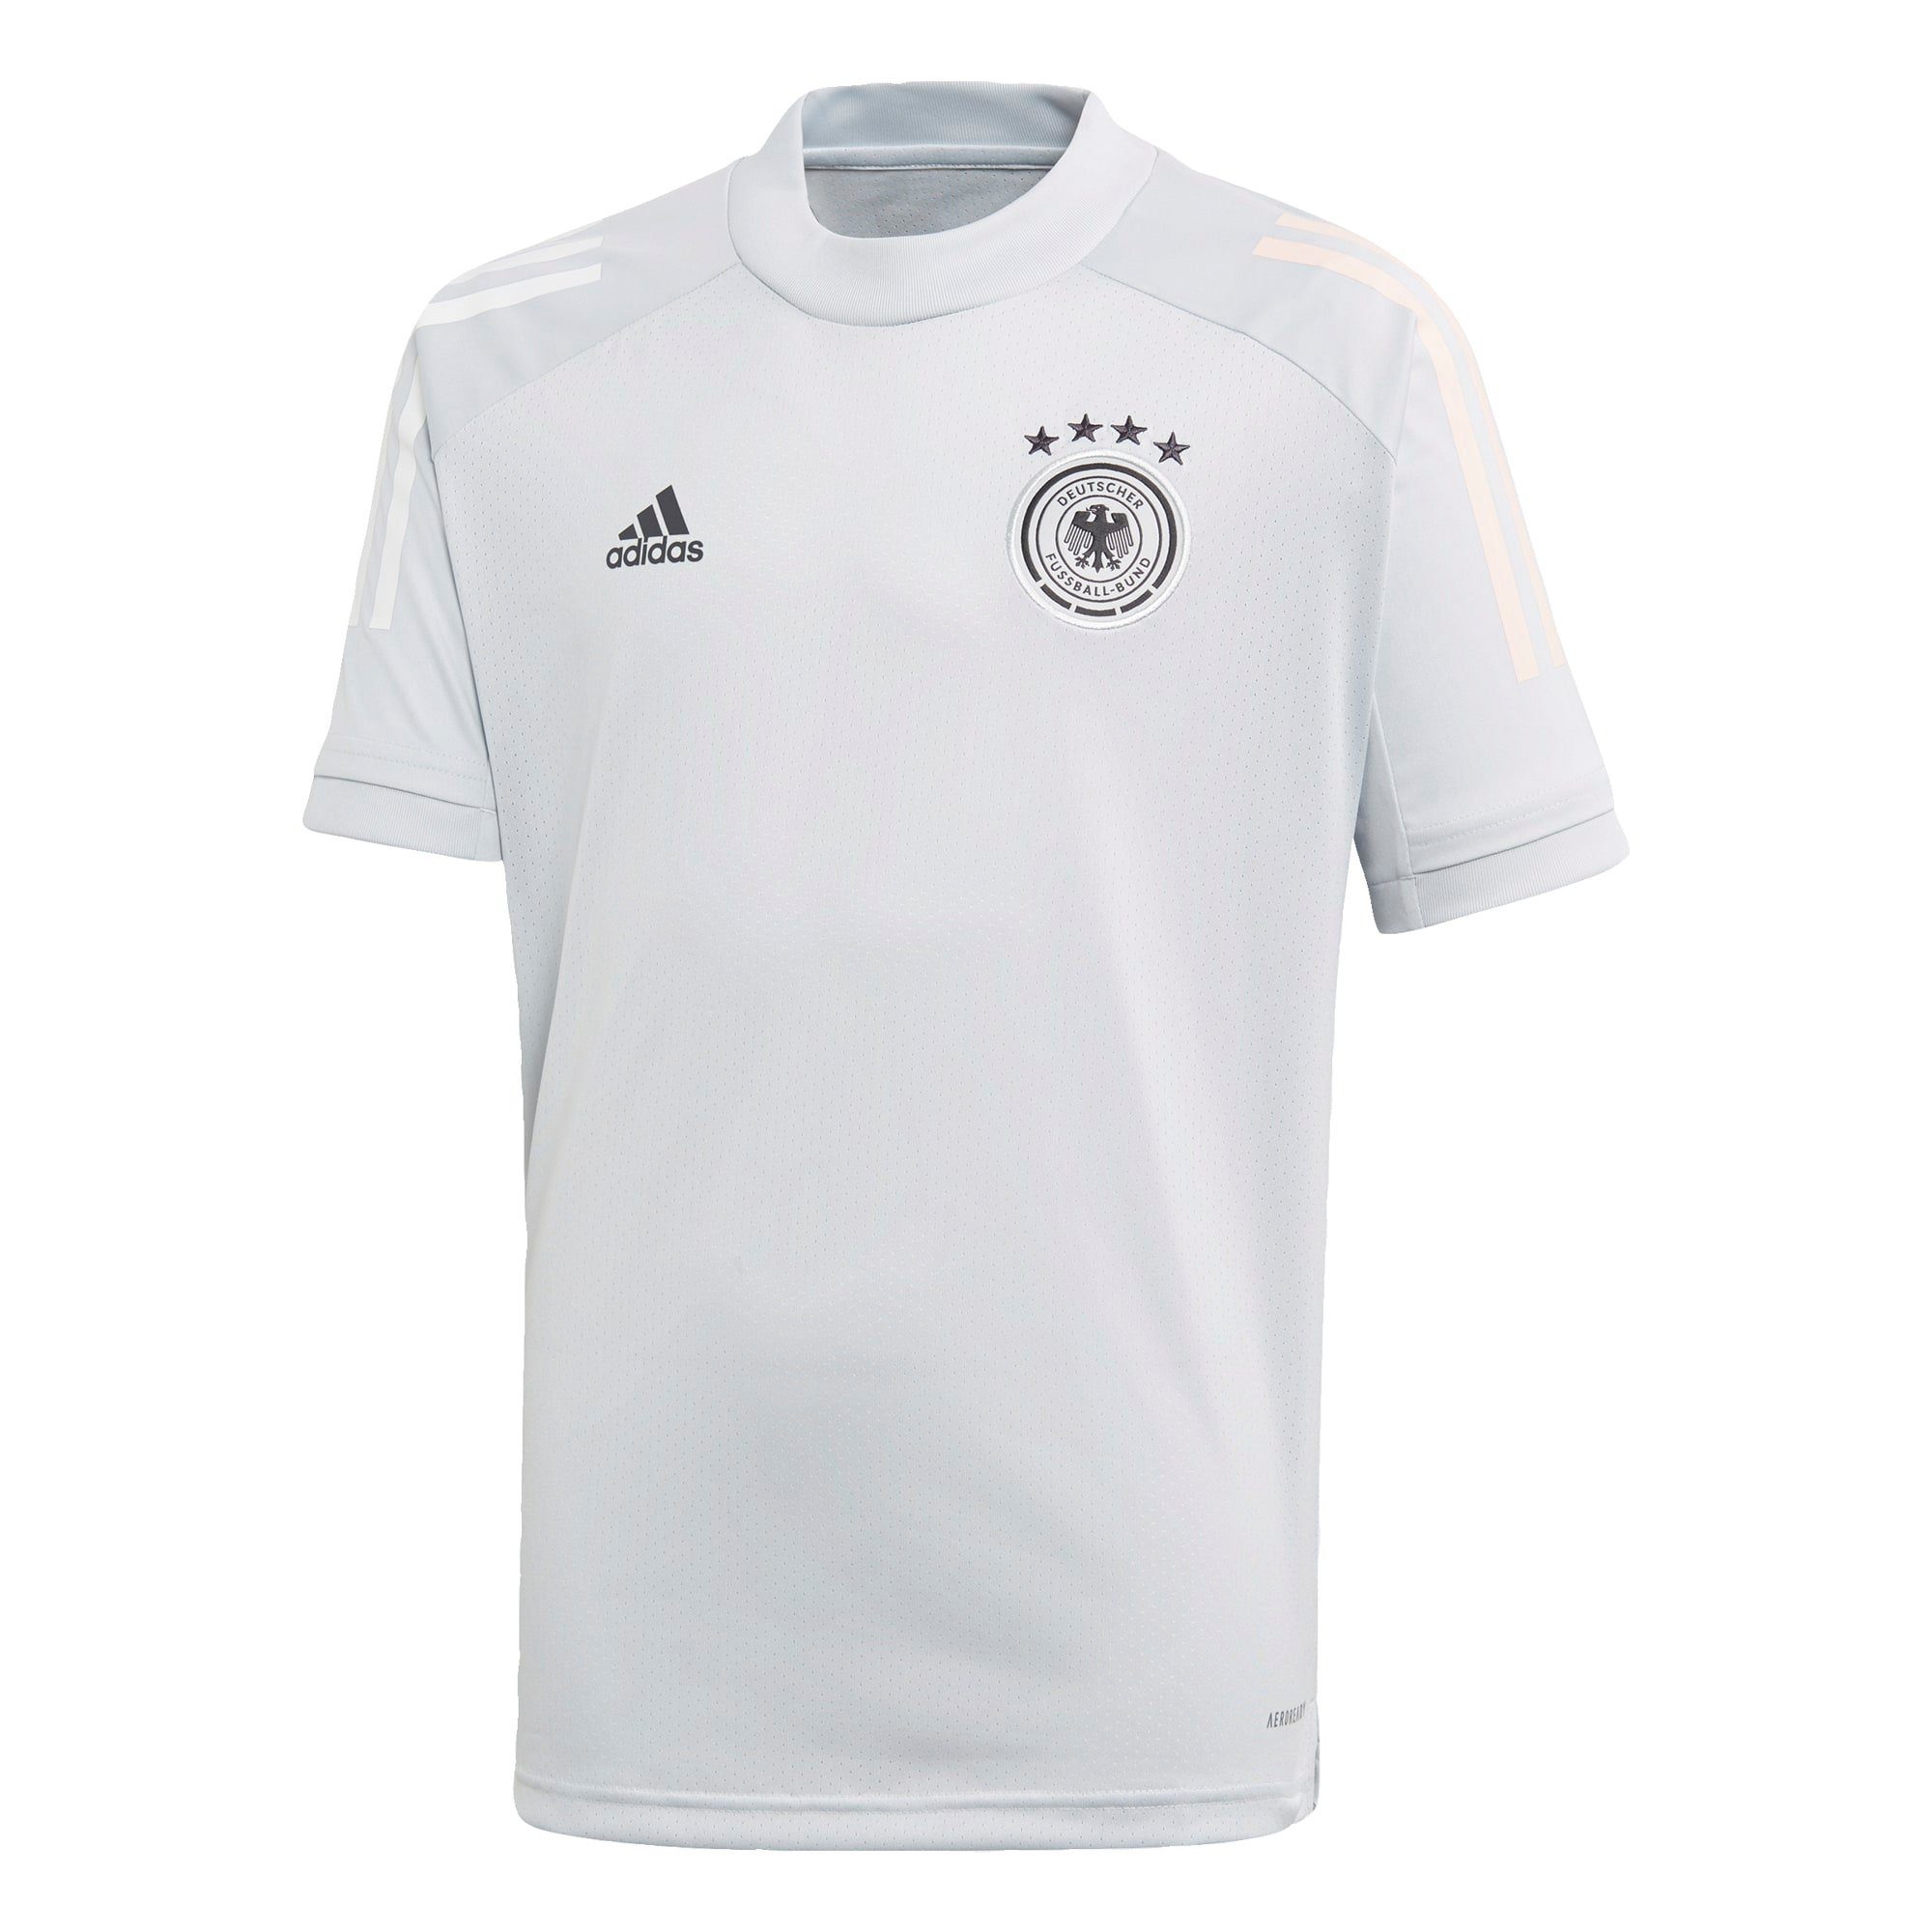 adidas Performance Fußballtrikot »DFB Trainingstrikot« online kaufen | OTTO